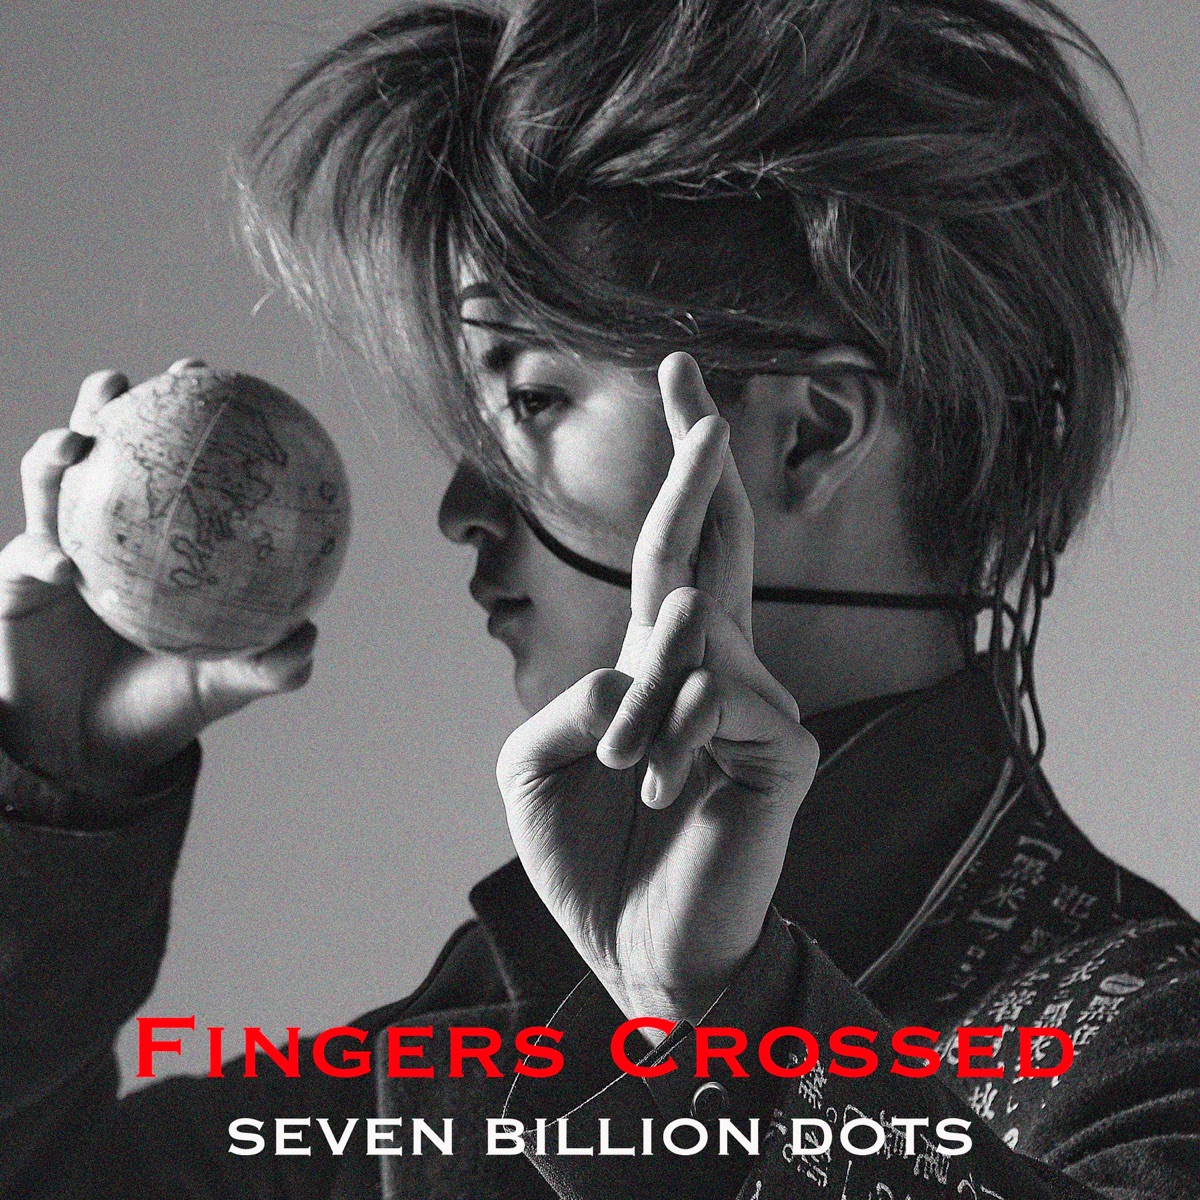 『Seven Billion Dots - Fingers Crossed 歌詞』収録の『Fingers Crossed』ジャケット